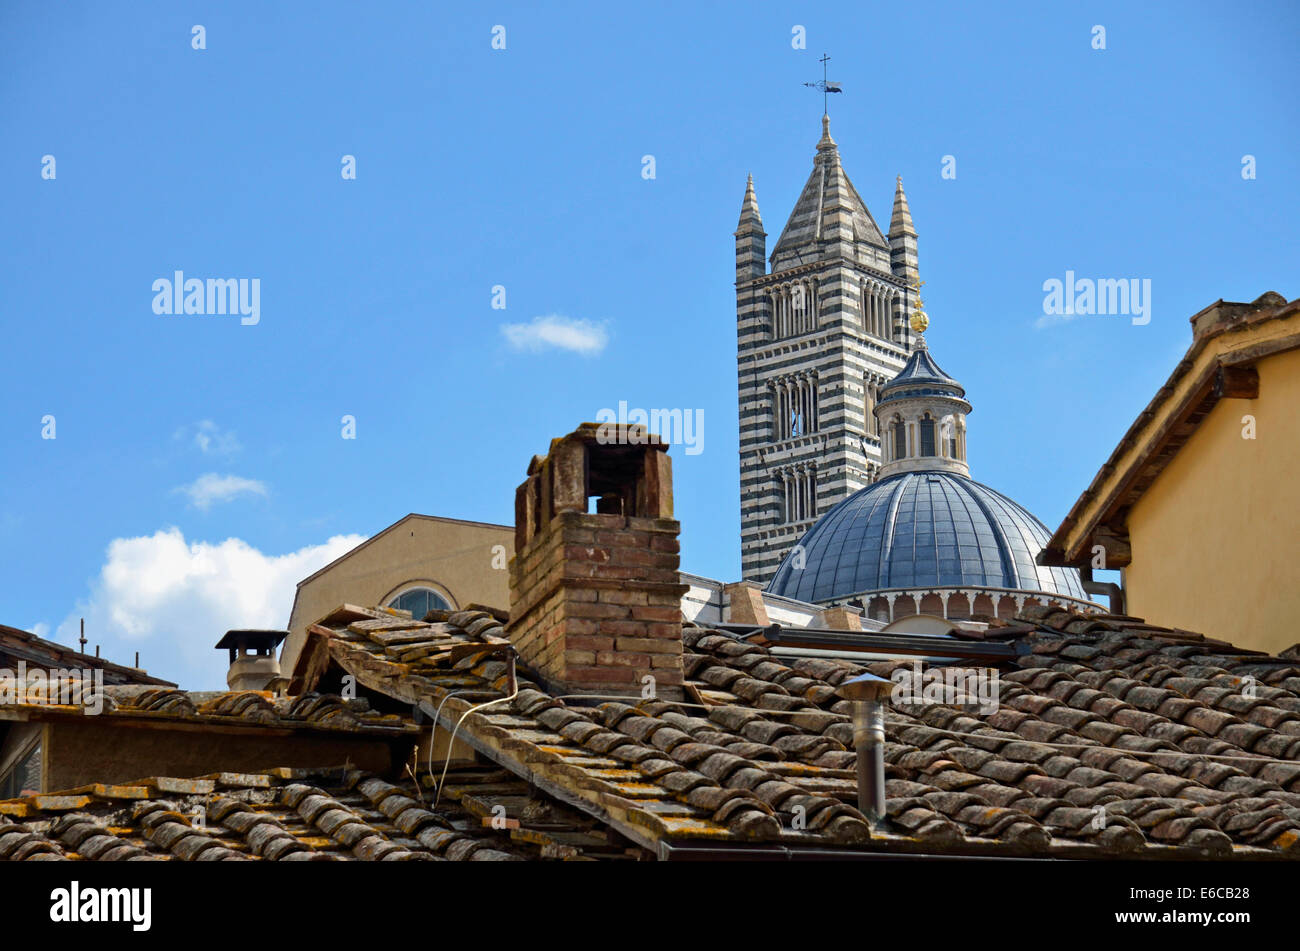 Siena, Toskana, Italien, Europa - Glockenturm der Kathedrale Duomo di Siena über rote Dächer Stockfoto